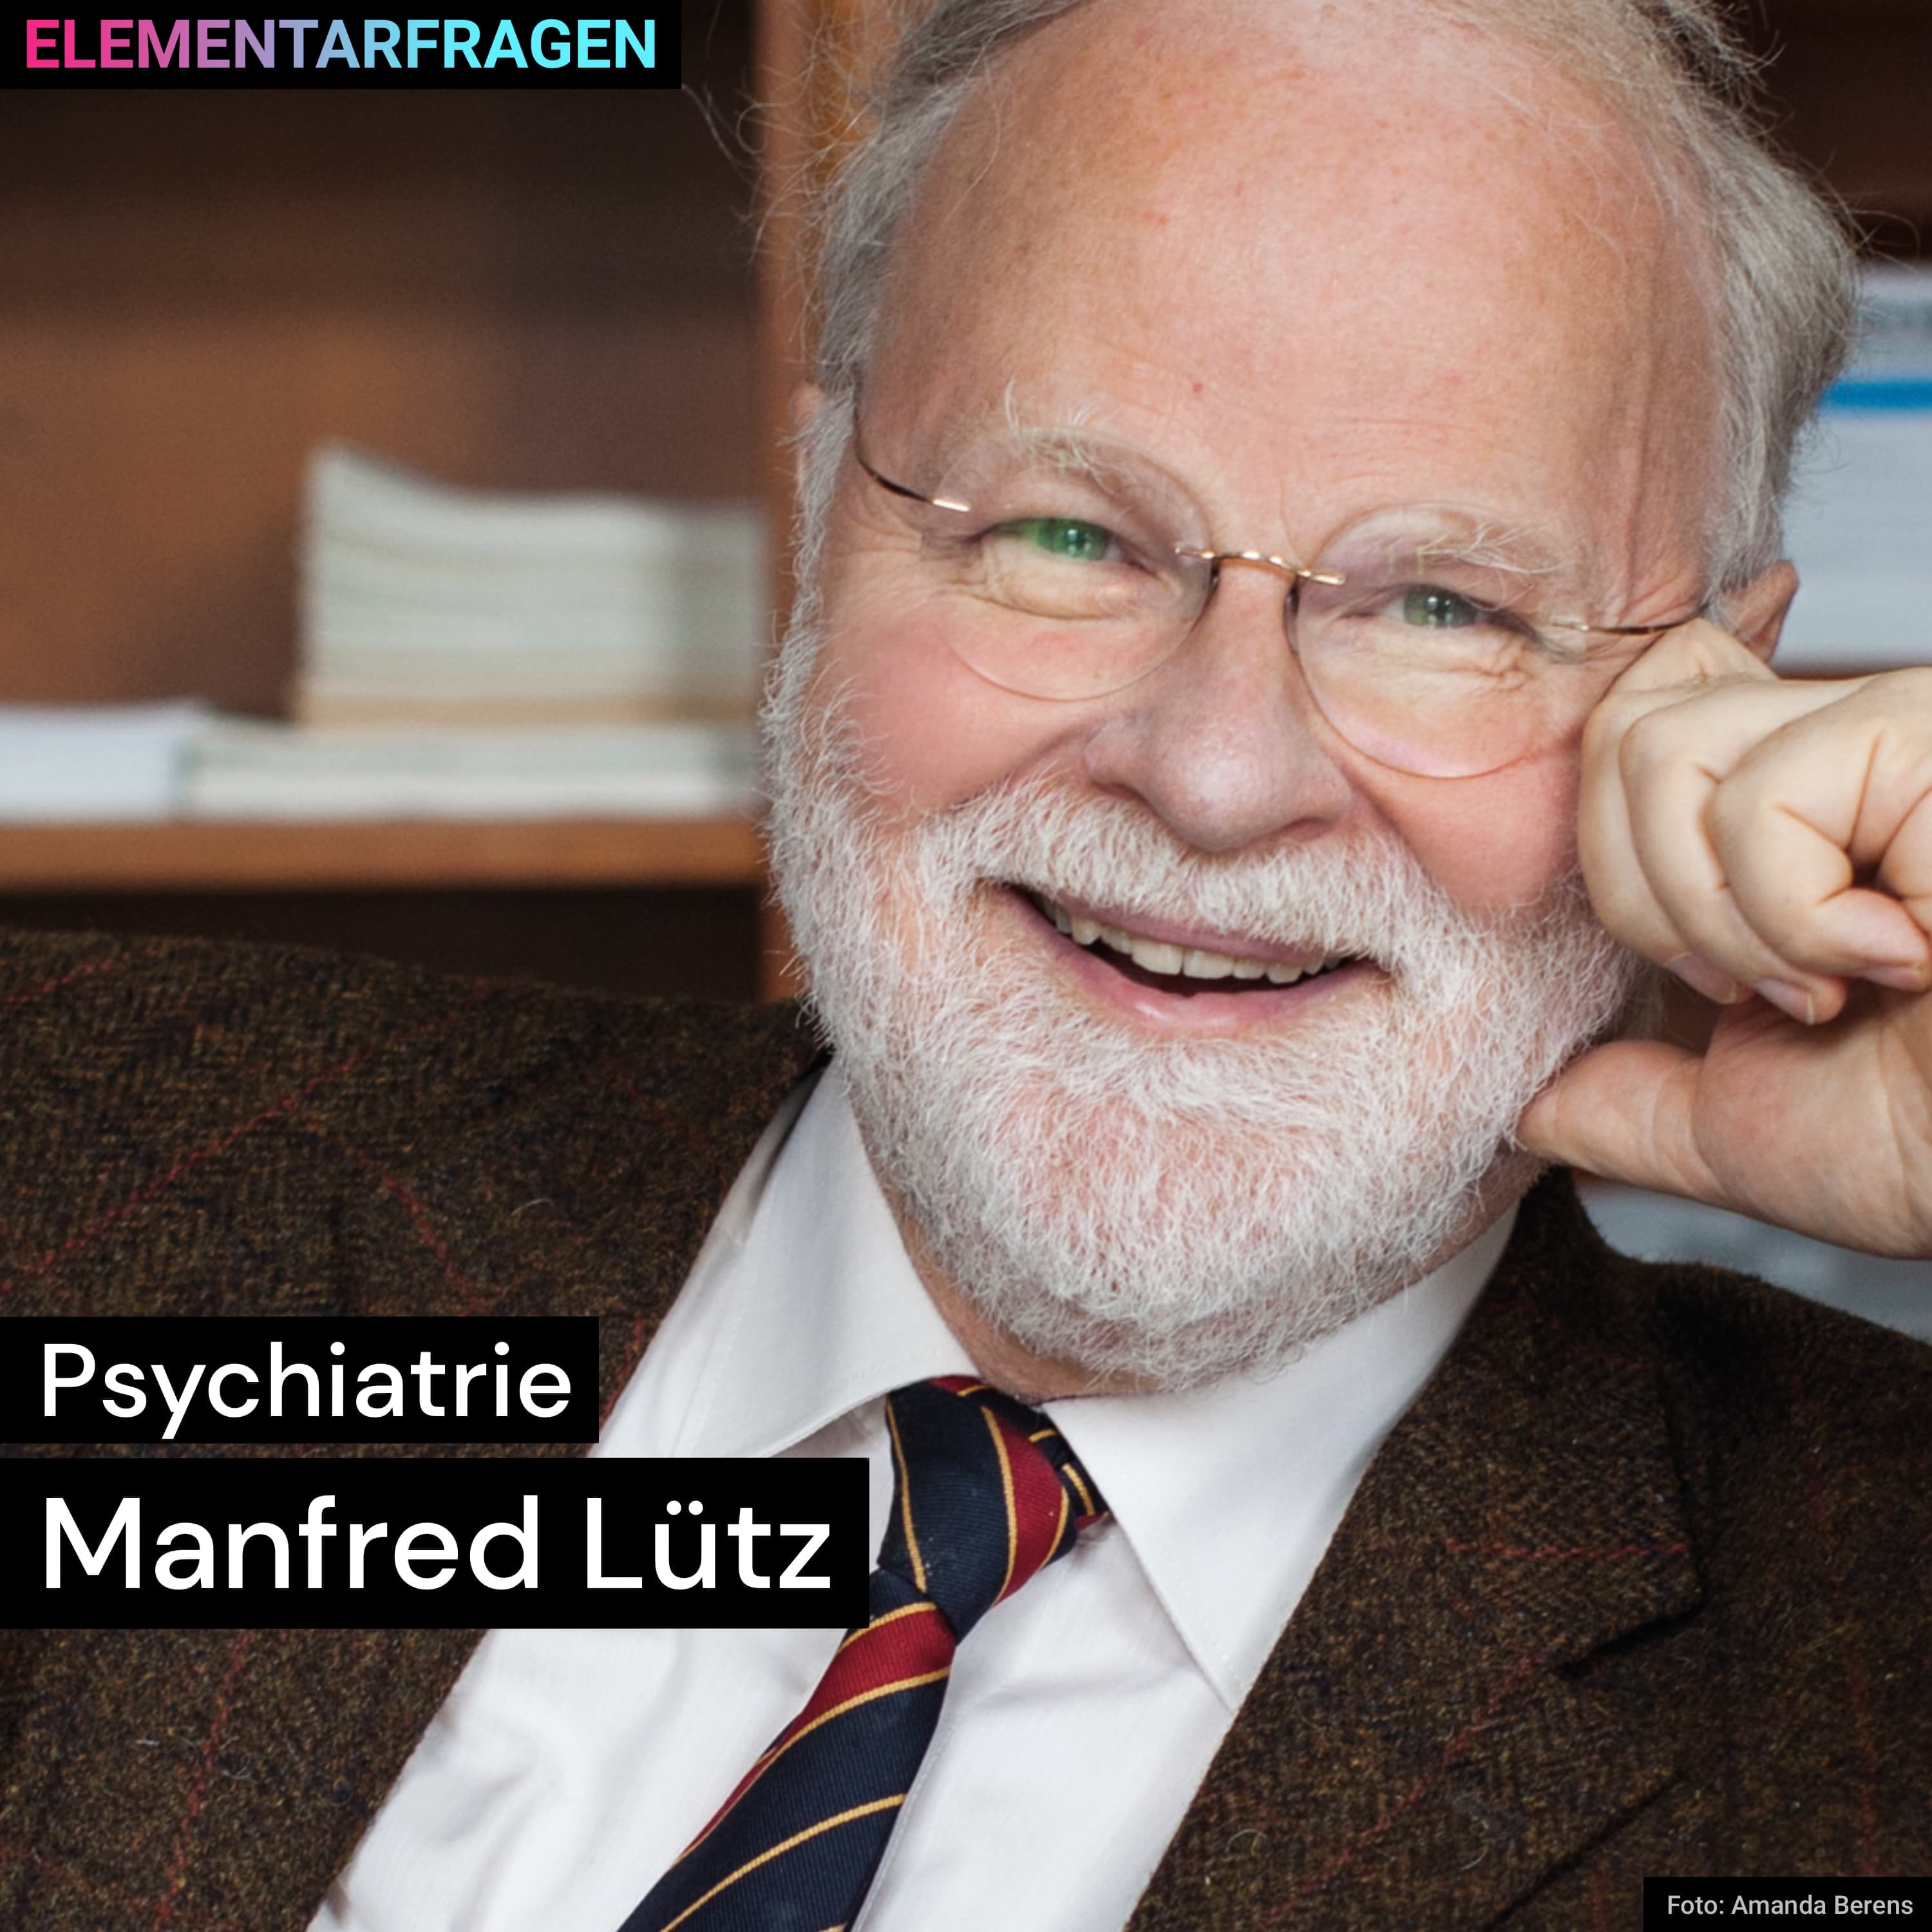 Psychiatrie | Manfred Lütz